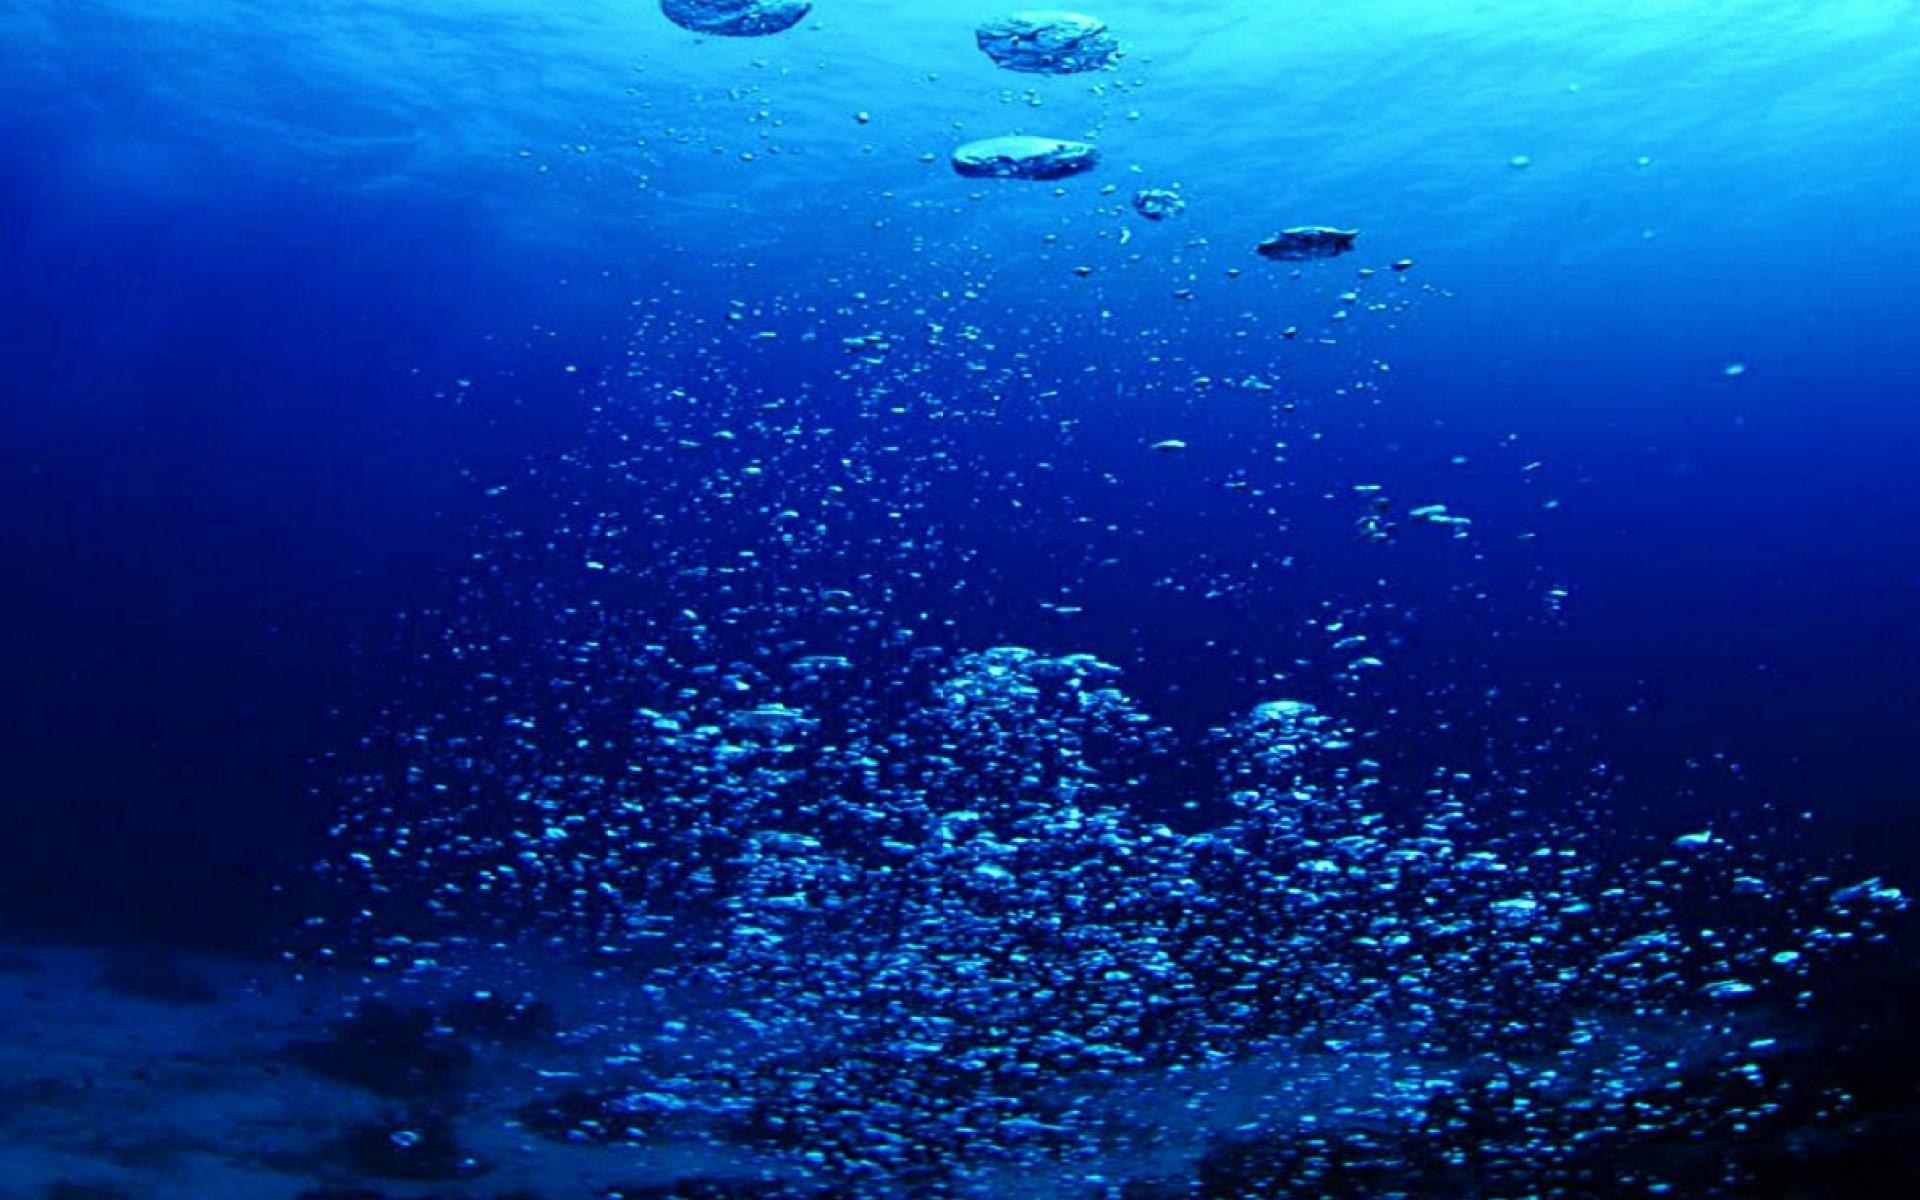 Deep Blue Sea Background. Sea